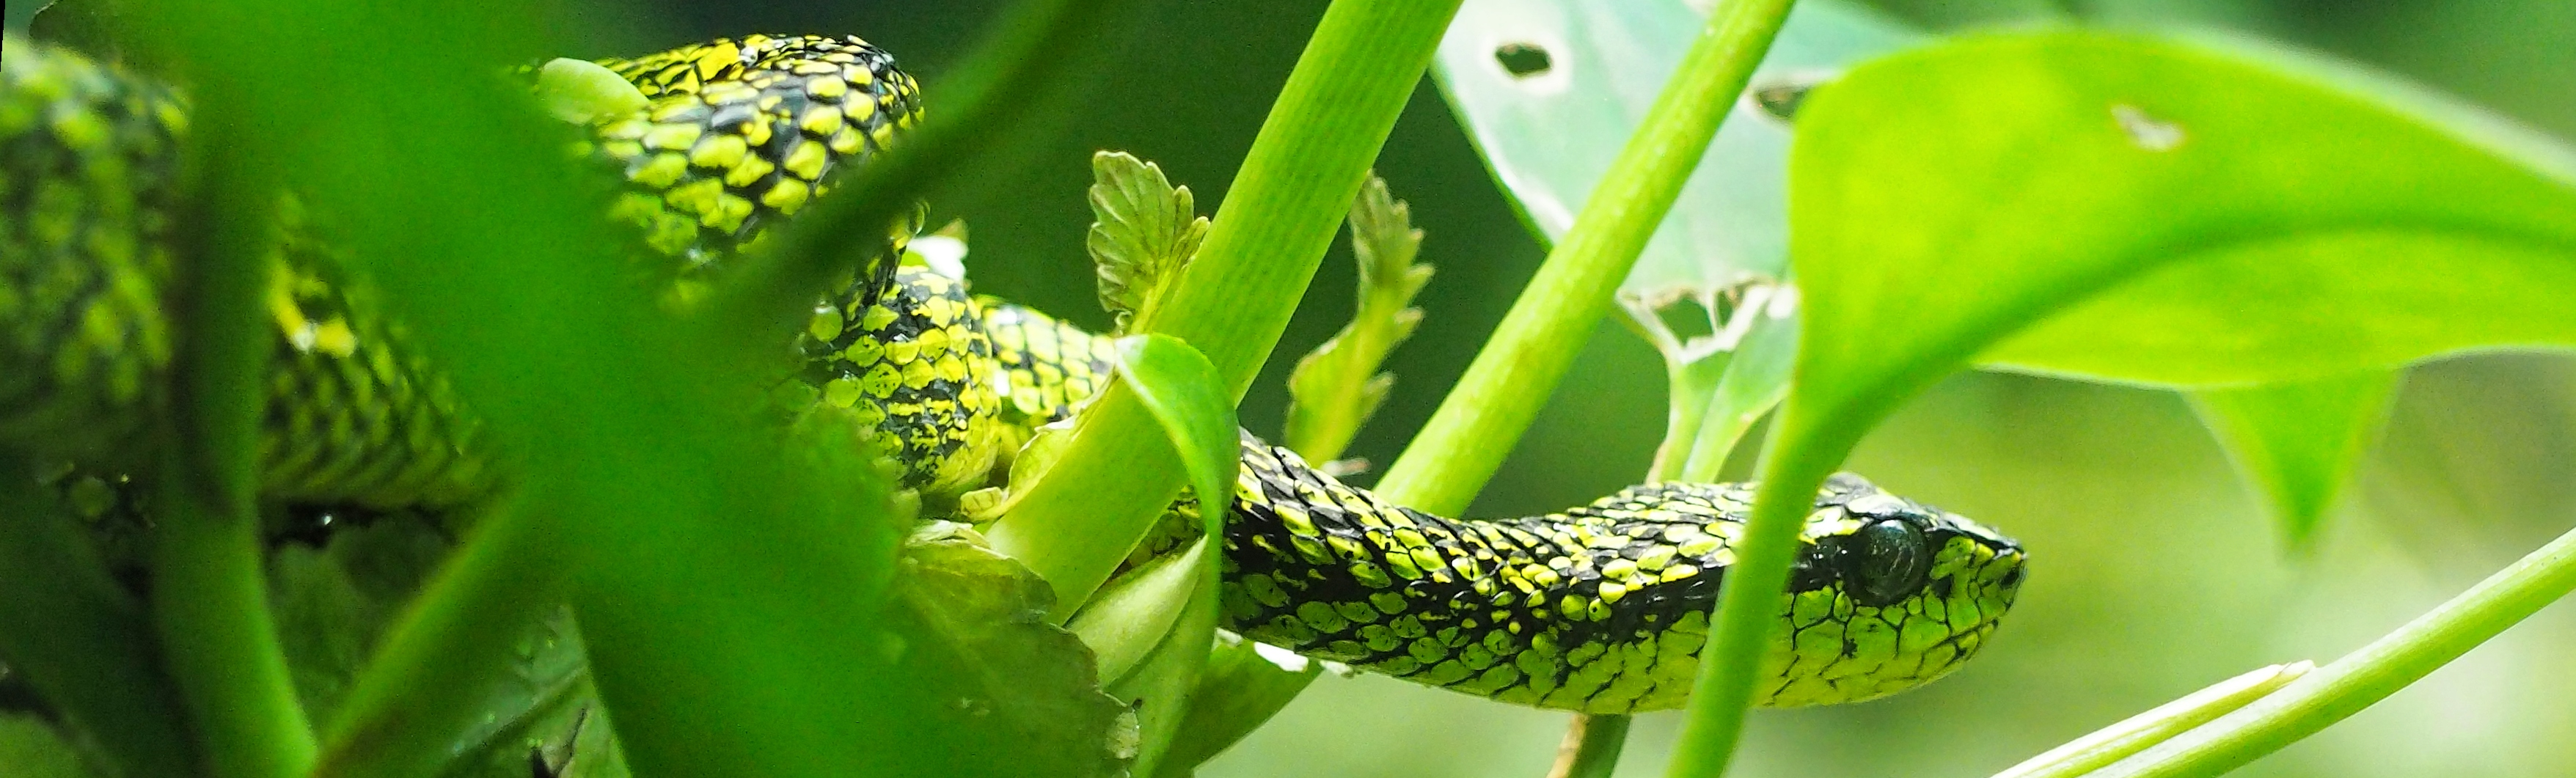 Serpent - Costa Rica - DESTINATIONS LATINES